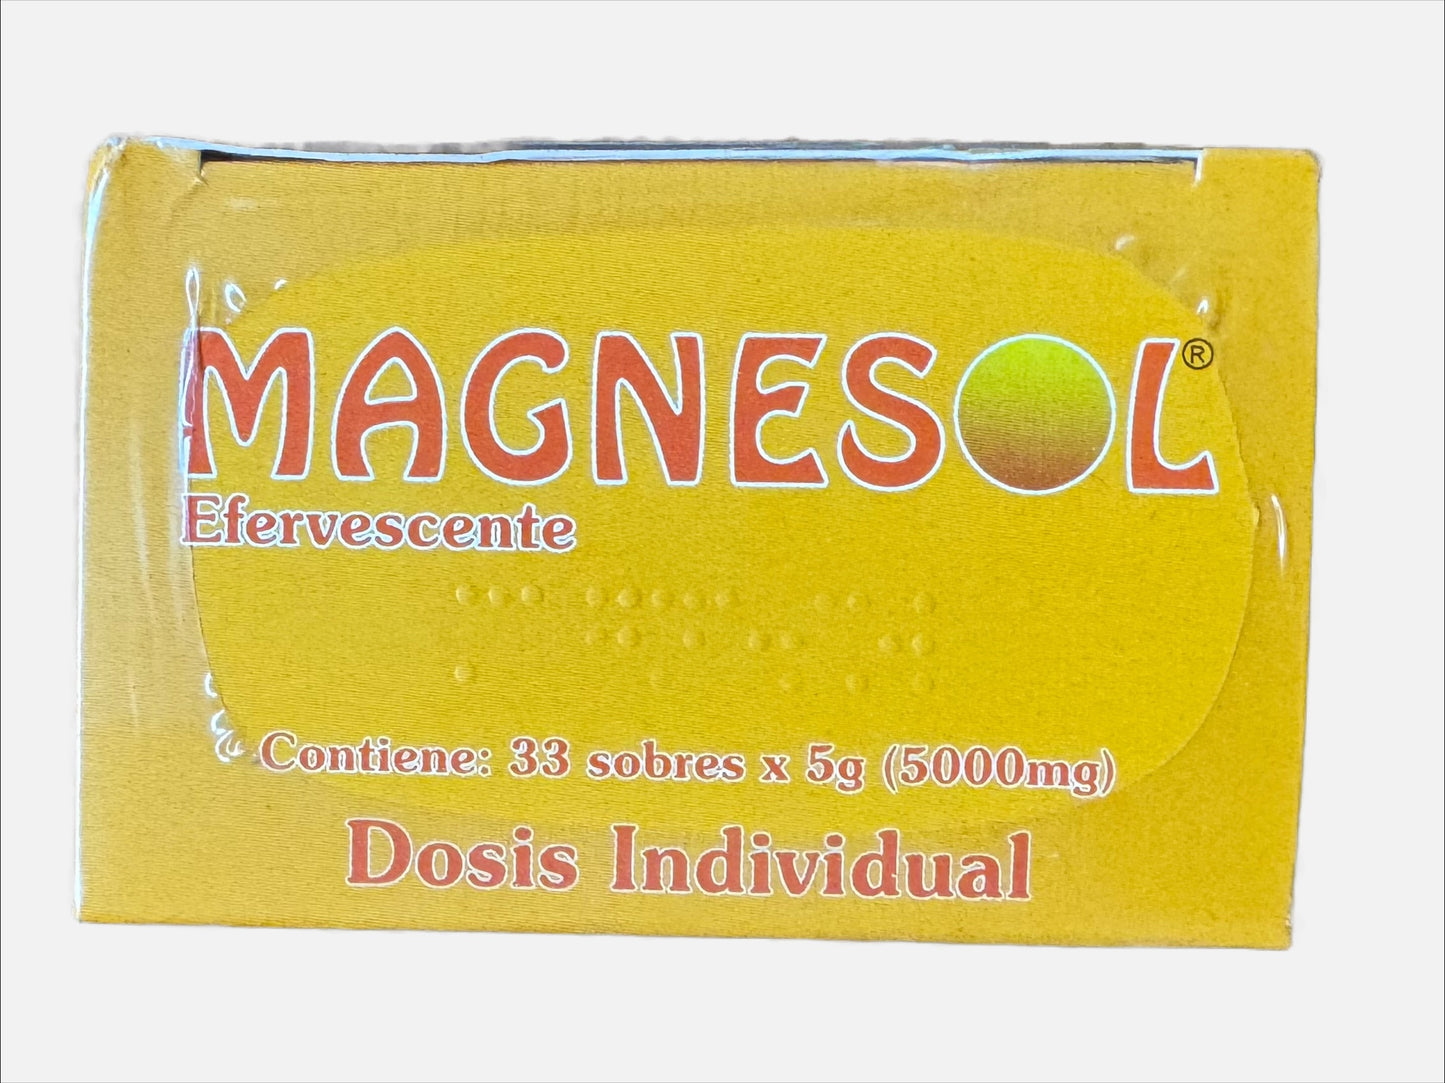 Magnesol Naranja, 33 Count Magnesium 5g Orange